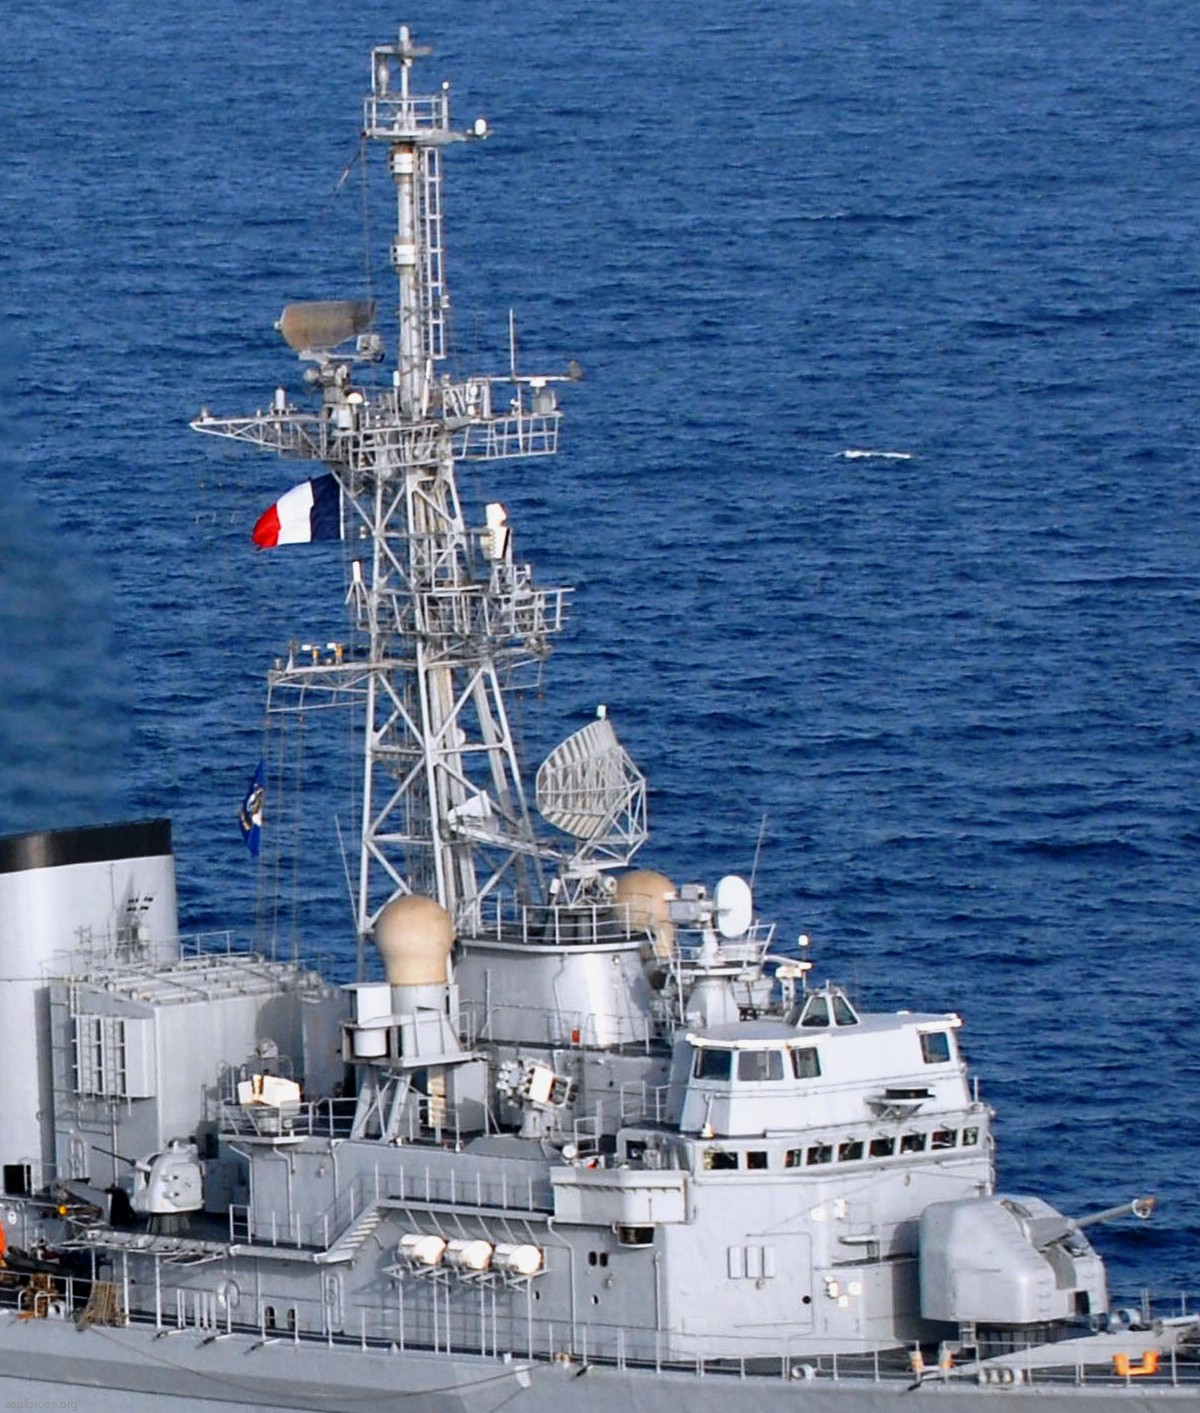 d-641 fs dupleix georges leygues f70as class anti submarine frigate asw french navy marine nationale 05c sadral sam ciws gun